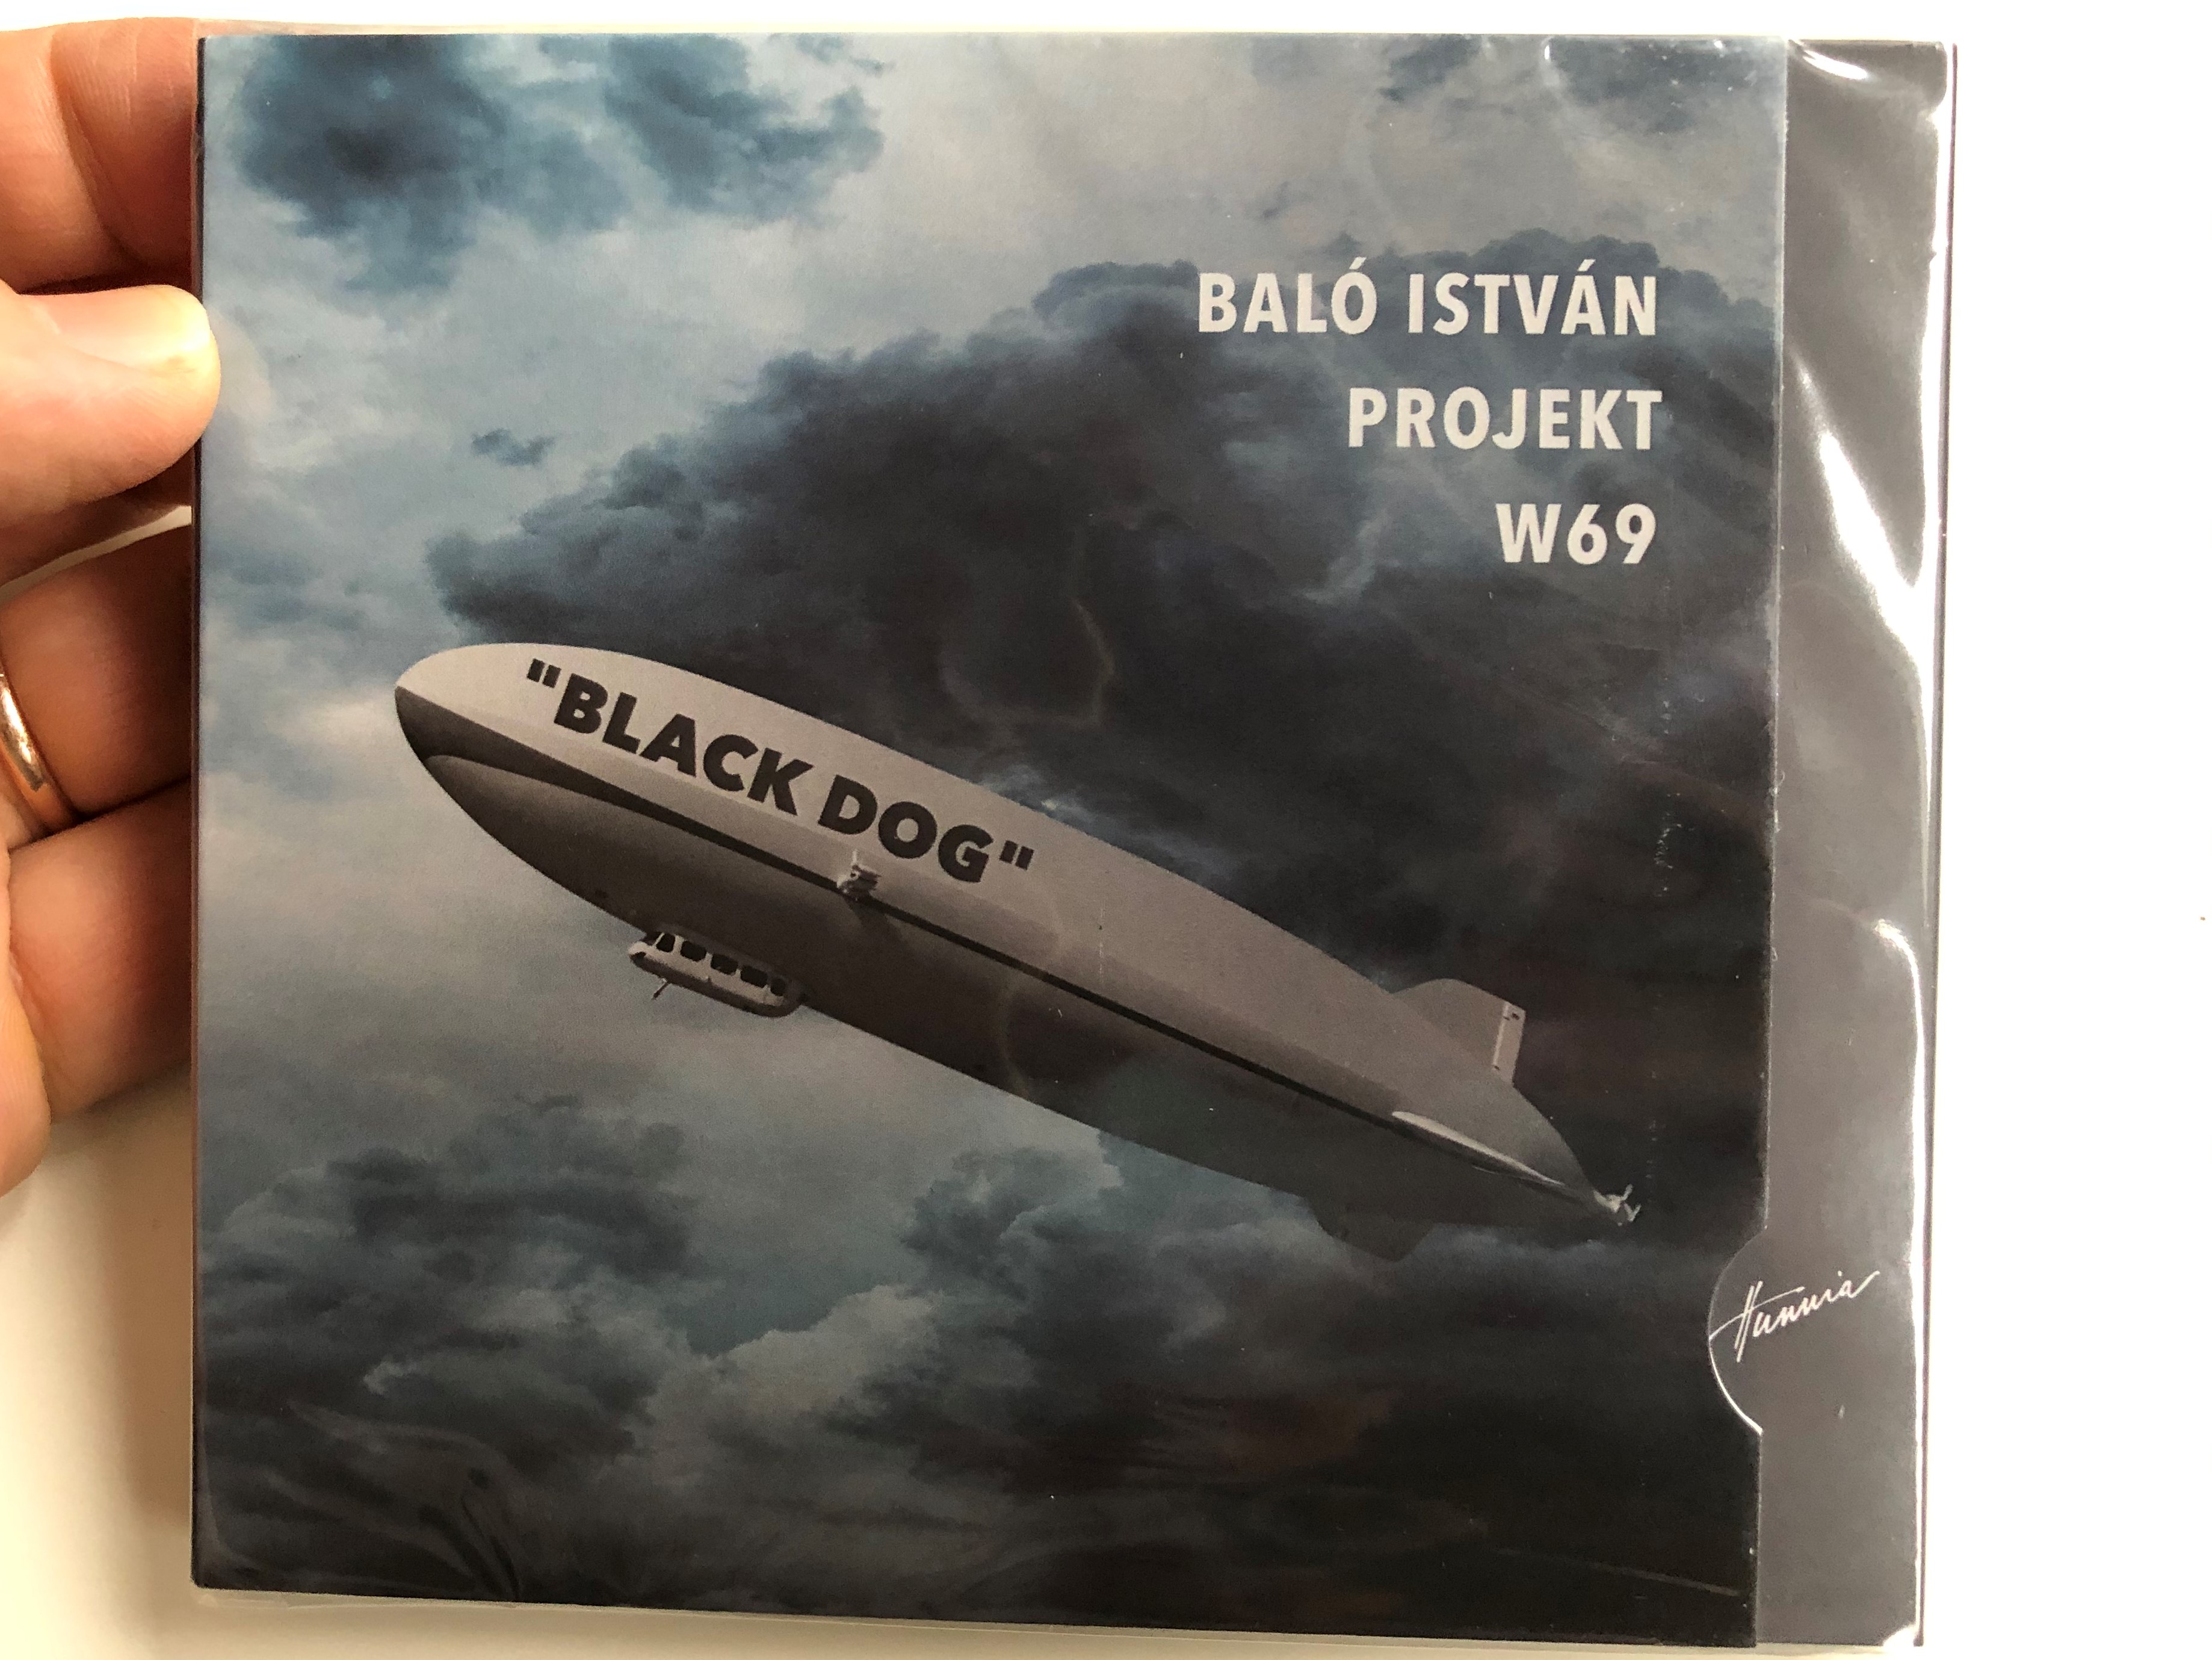 balo-istvan-projekt-black-dog-w-69-hunnia-records-film-production-audio-cd-2020-hrcd2002-1-.jpg